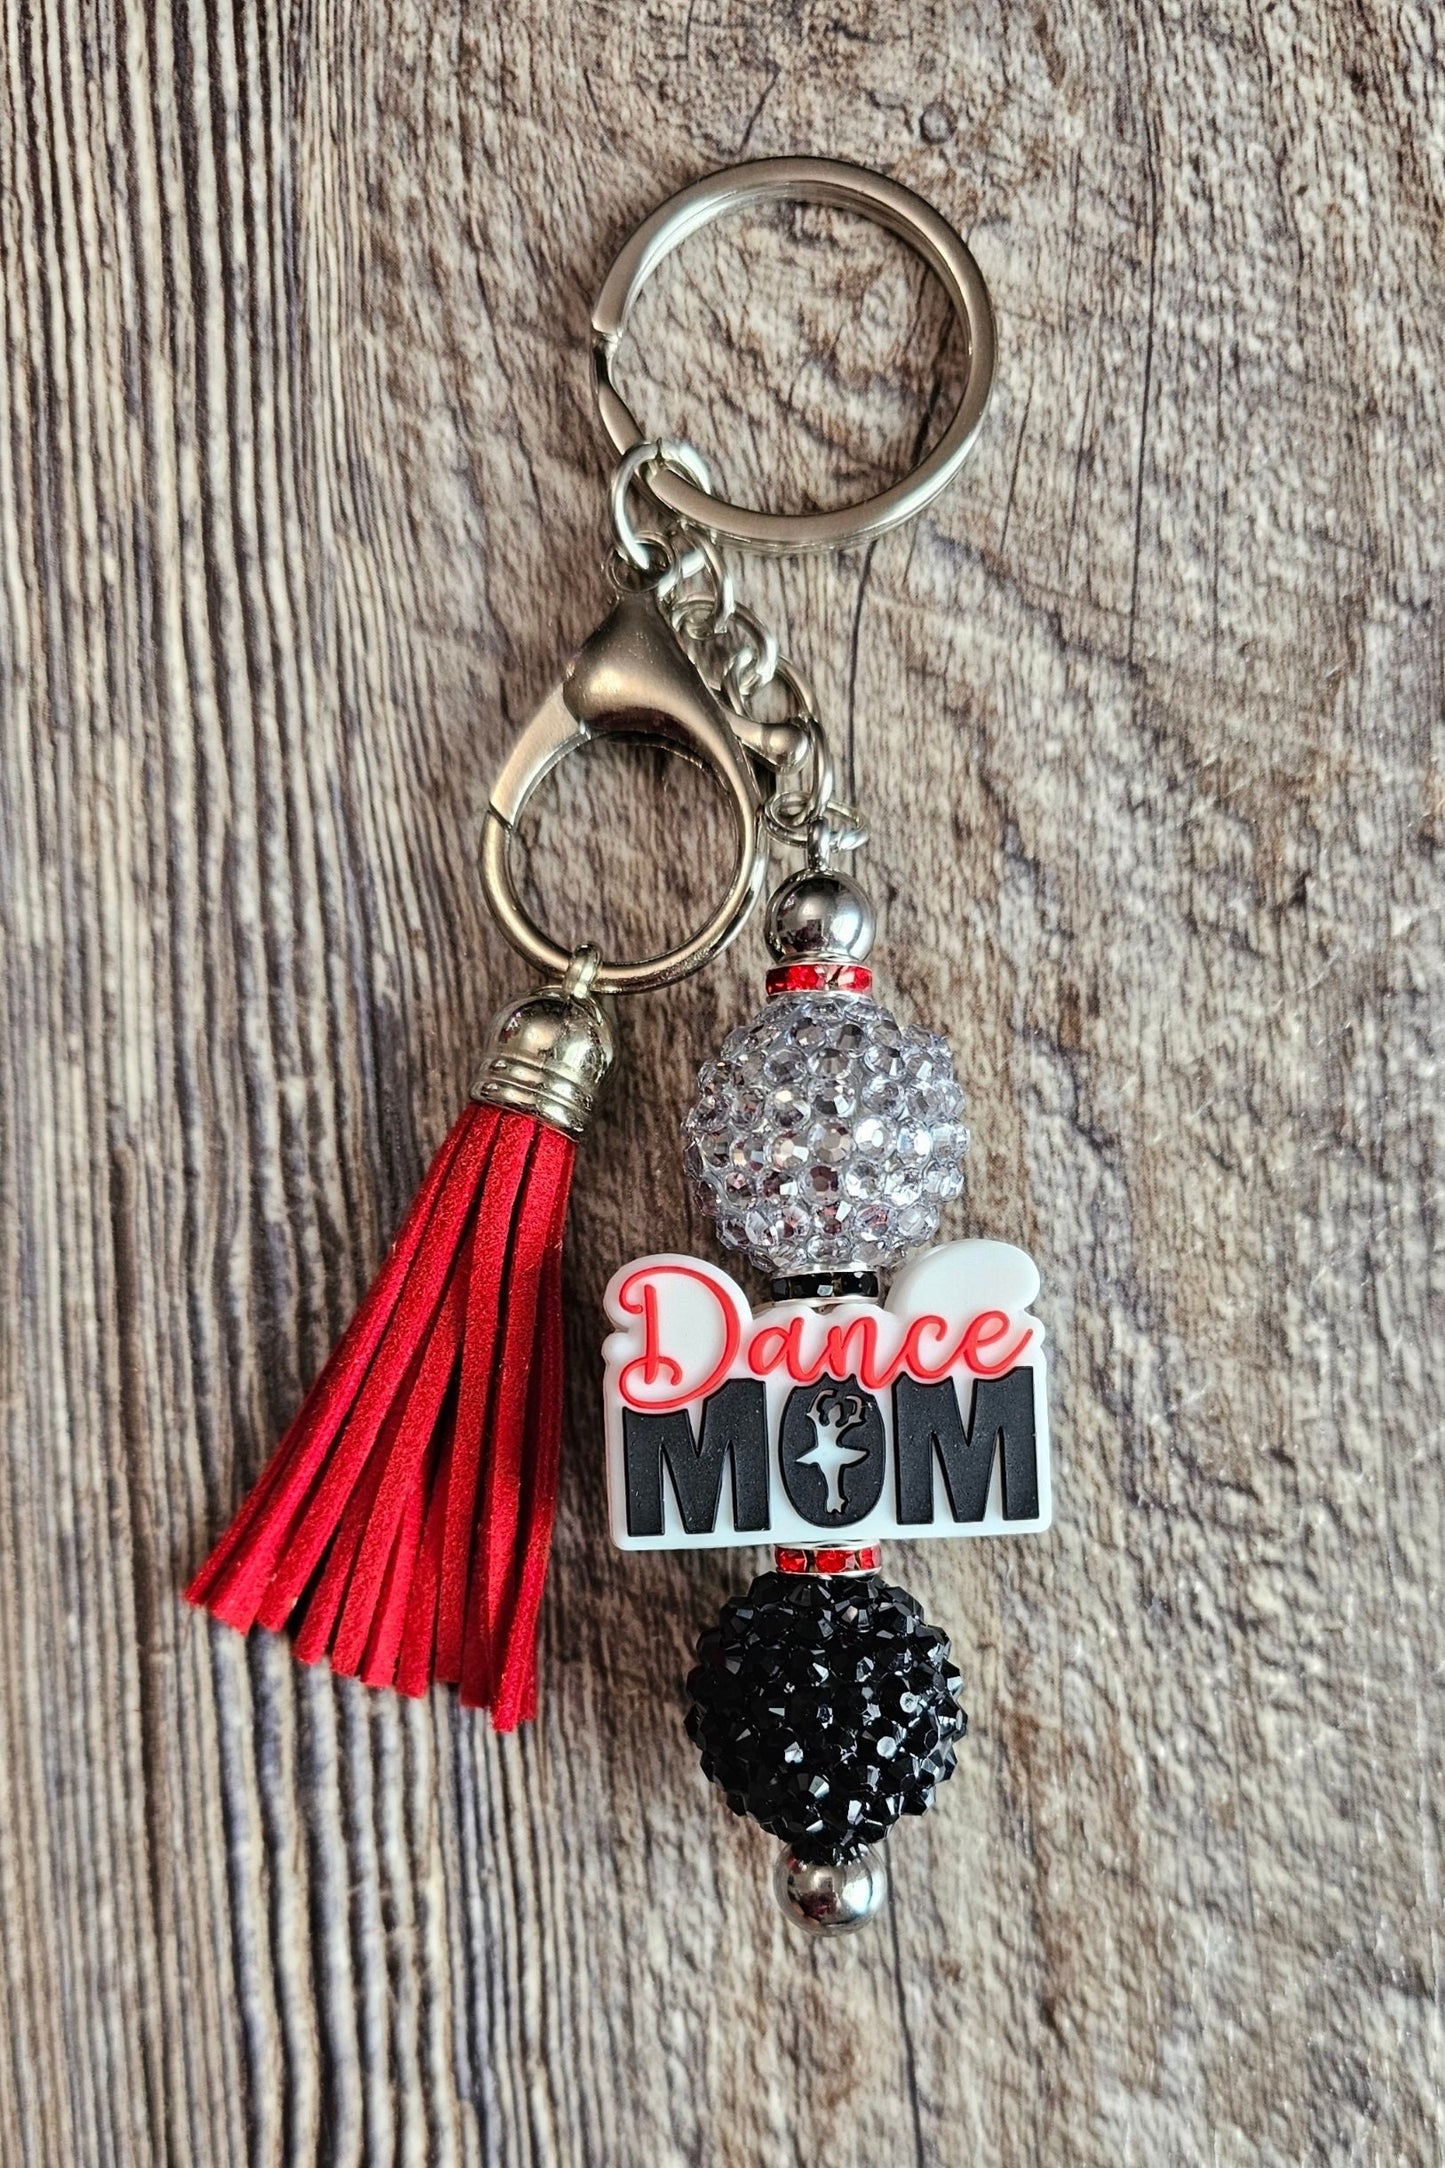 "Dance Mom" Keychain